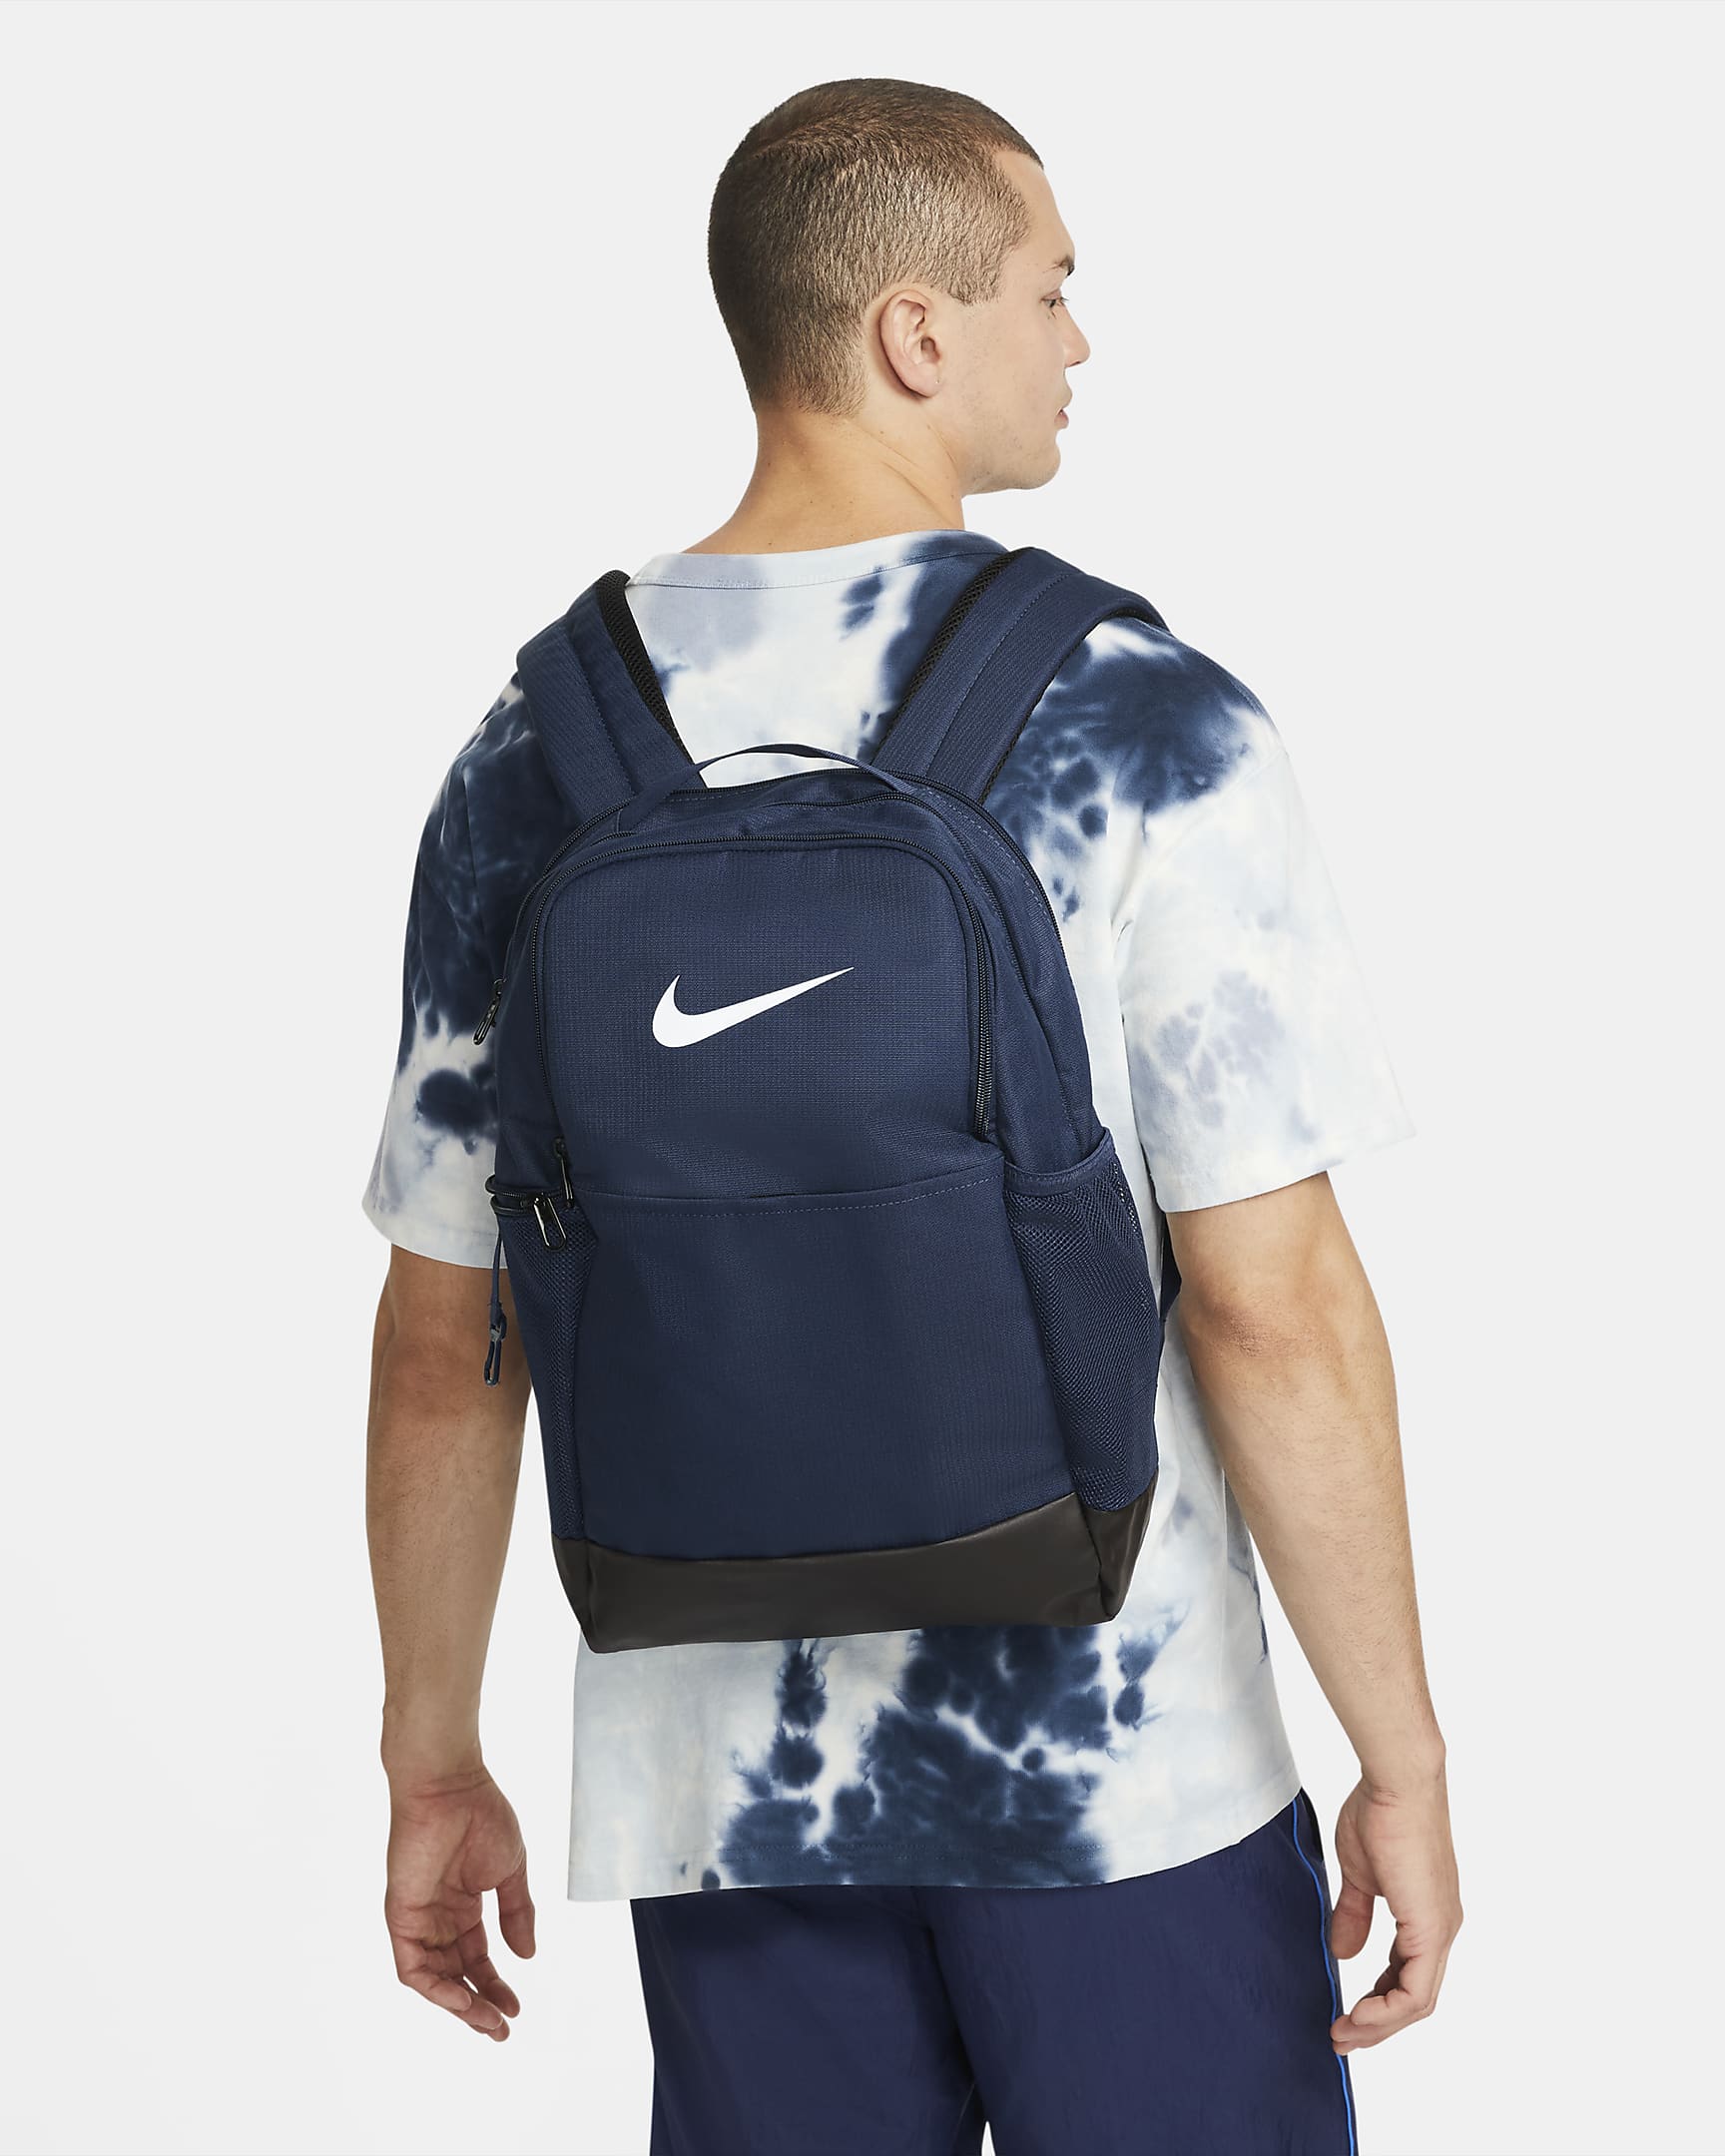 Nike Brasilia 9.5 Training Backpack 24L